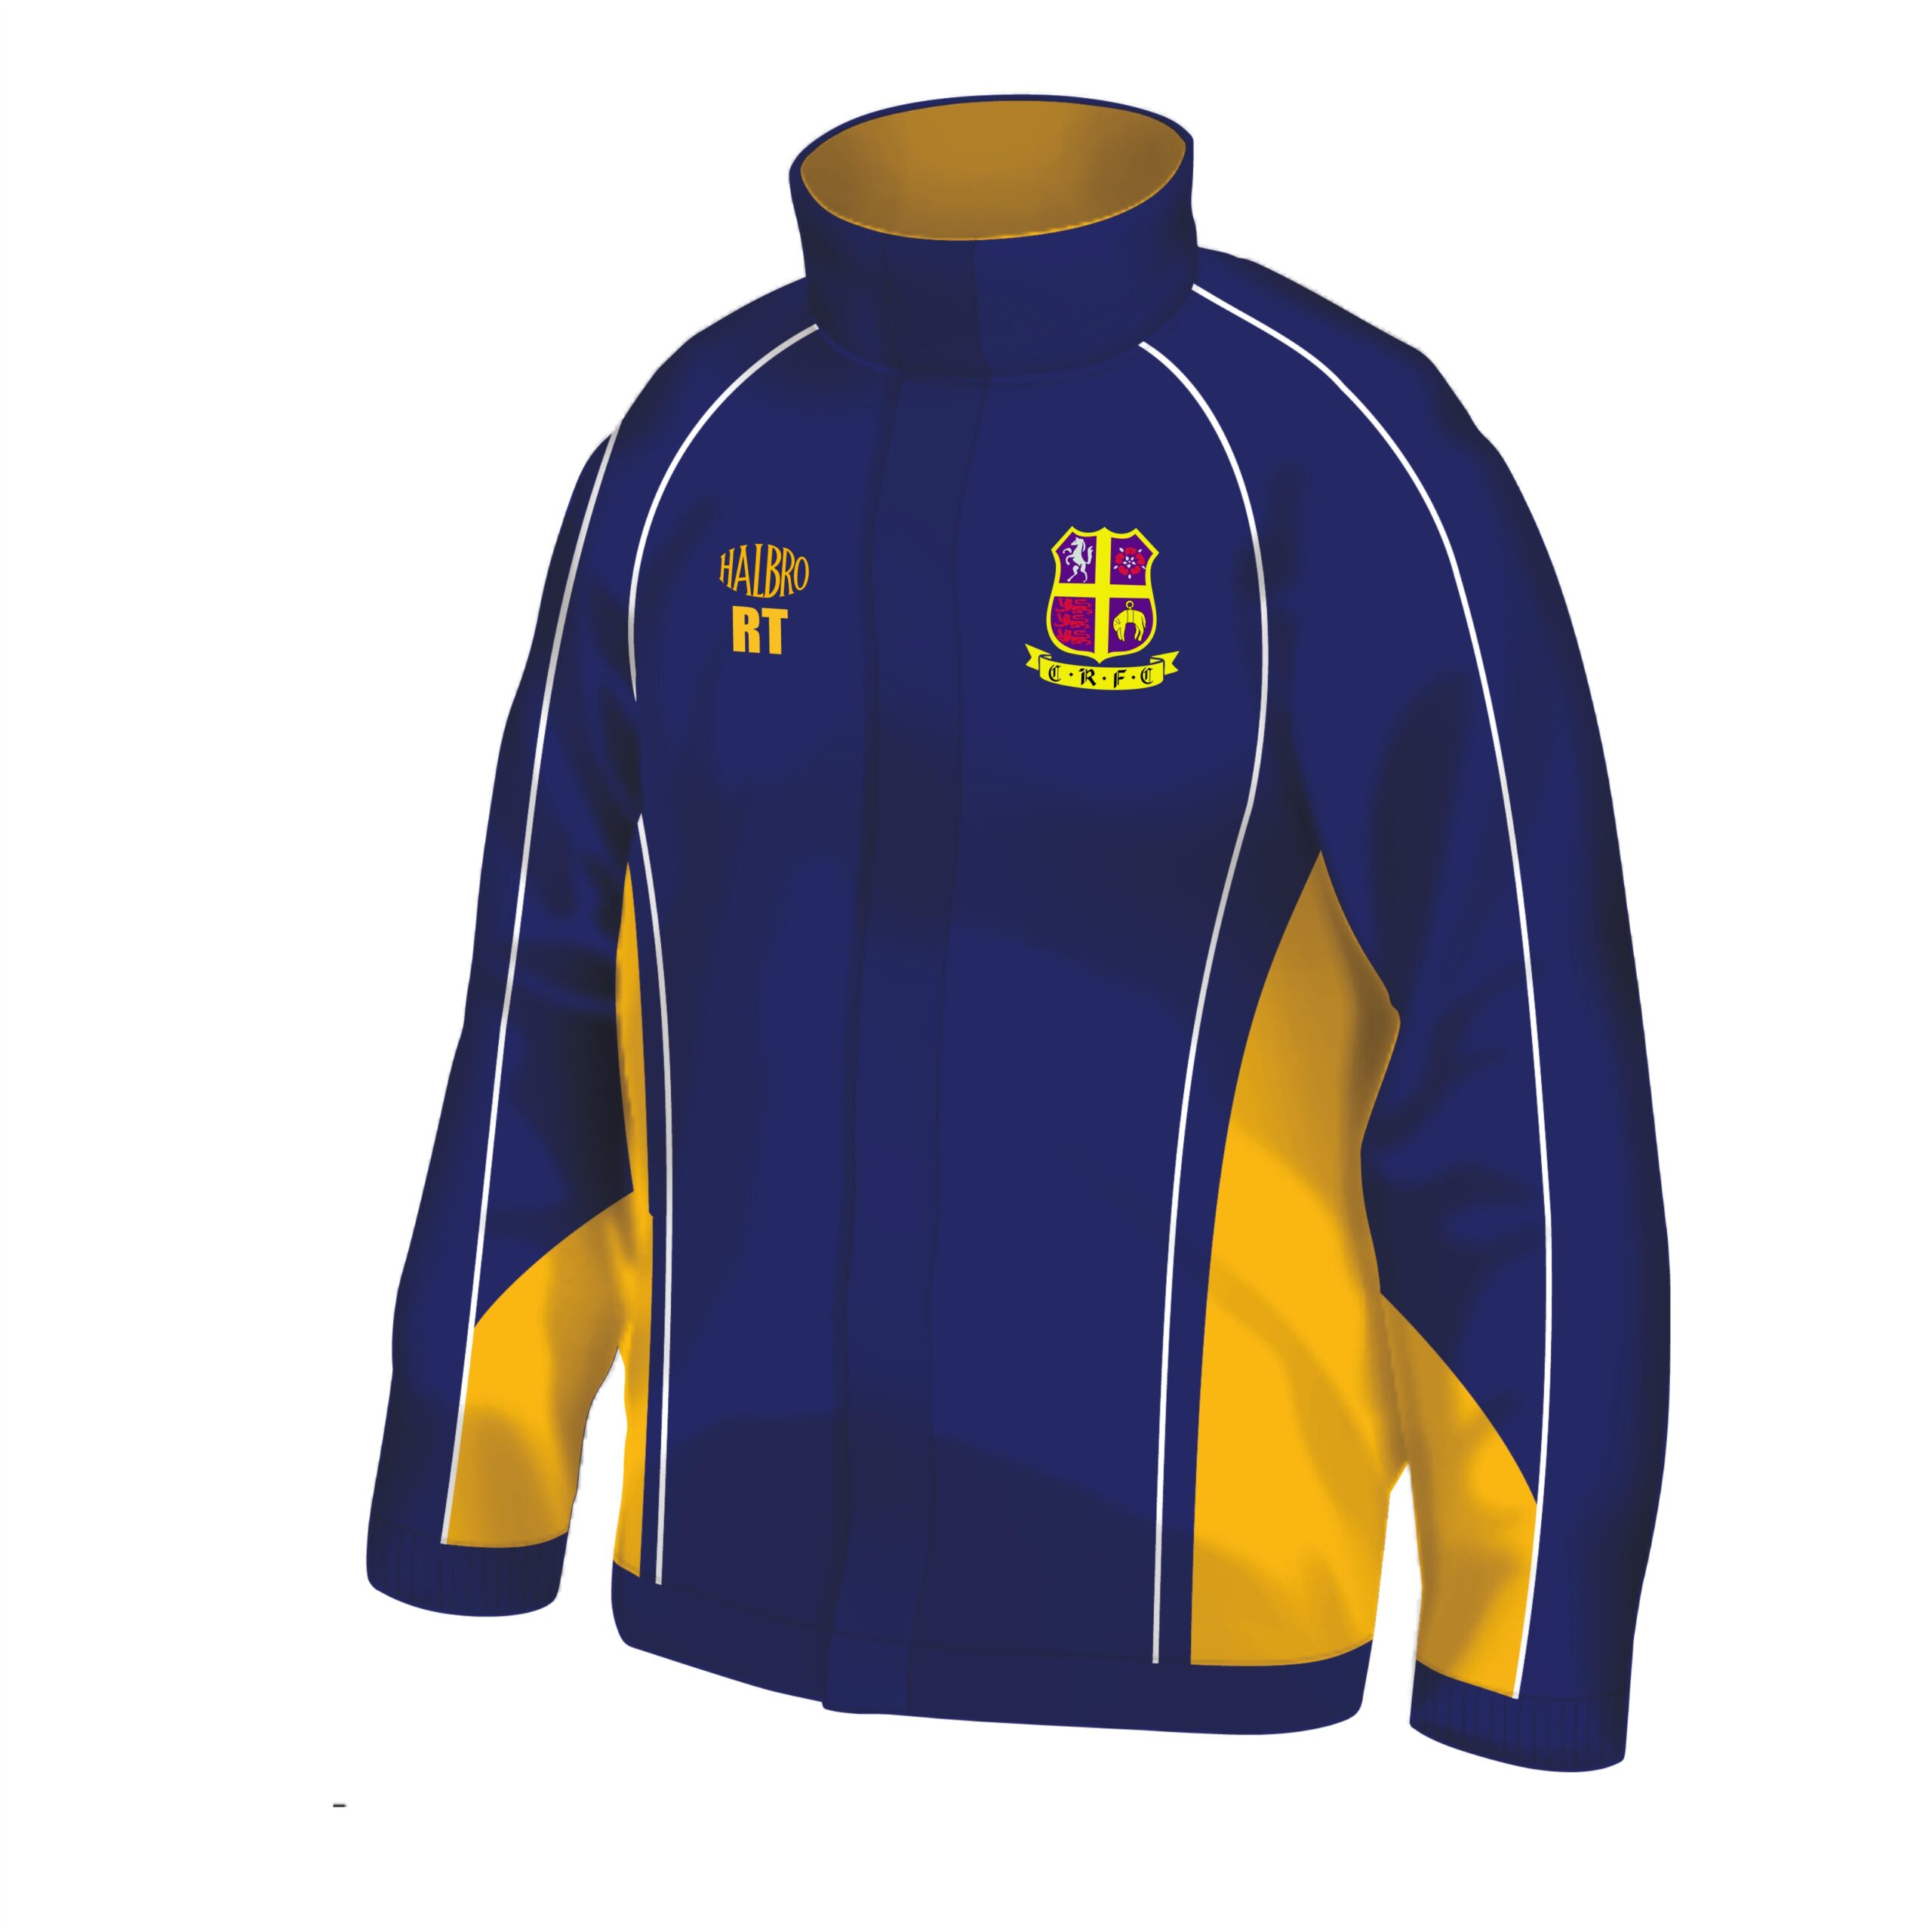 Cainscross RFC Seniors Champion Rain Jacket - Halbro Sportswear Limited